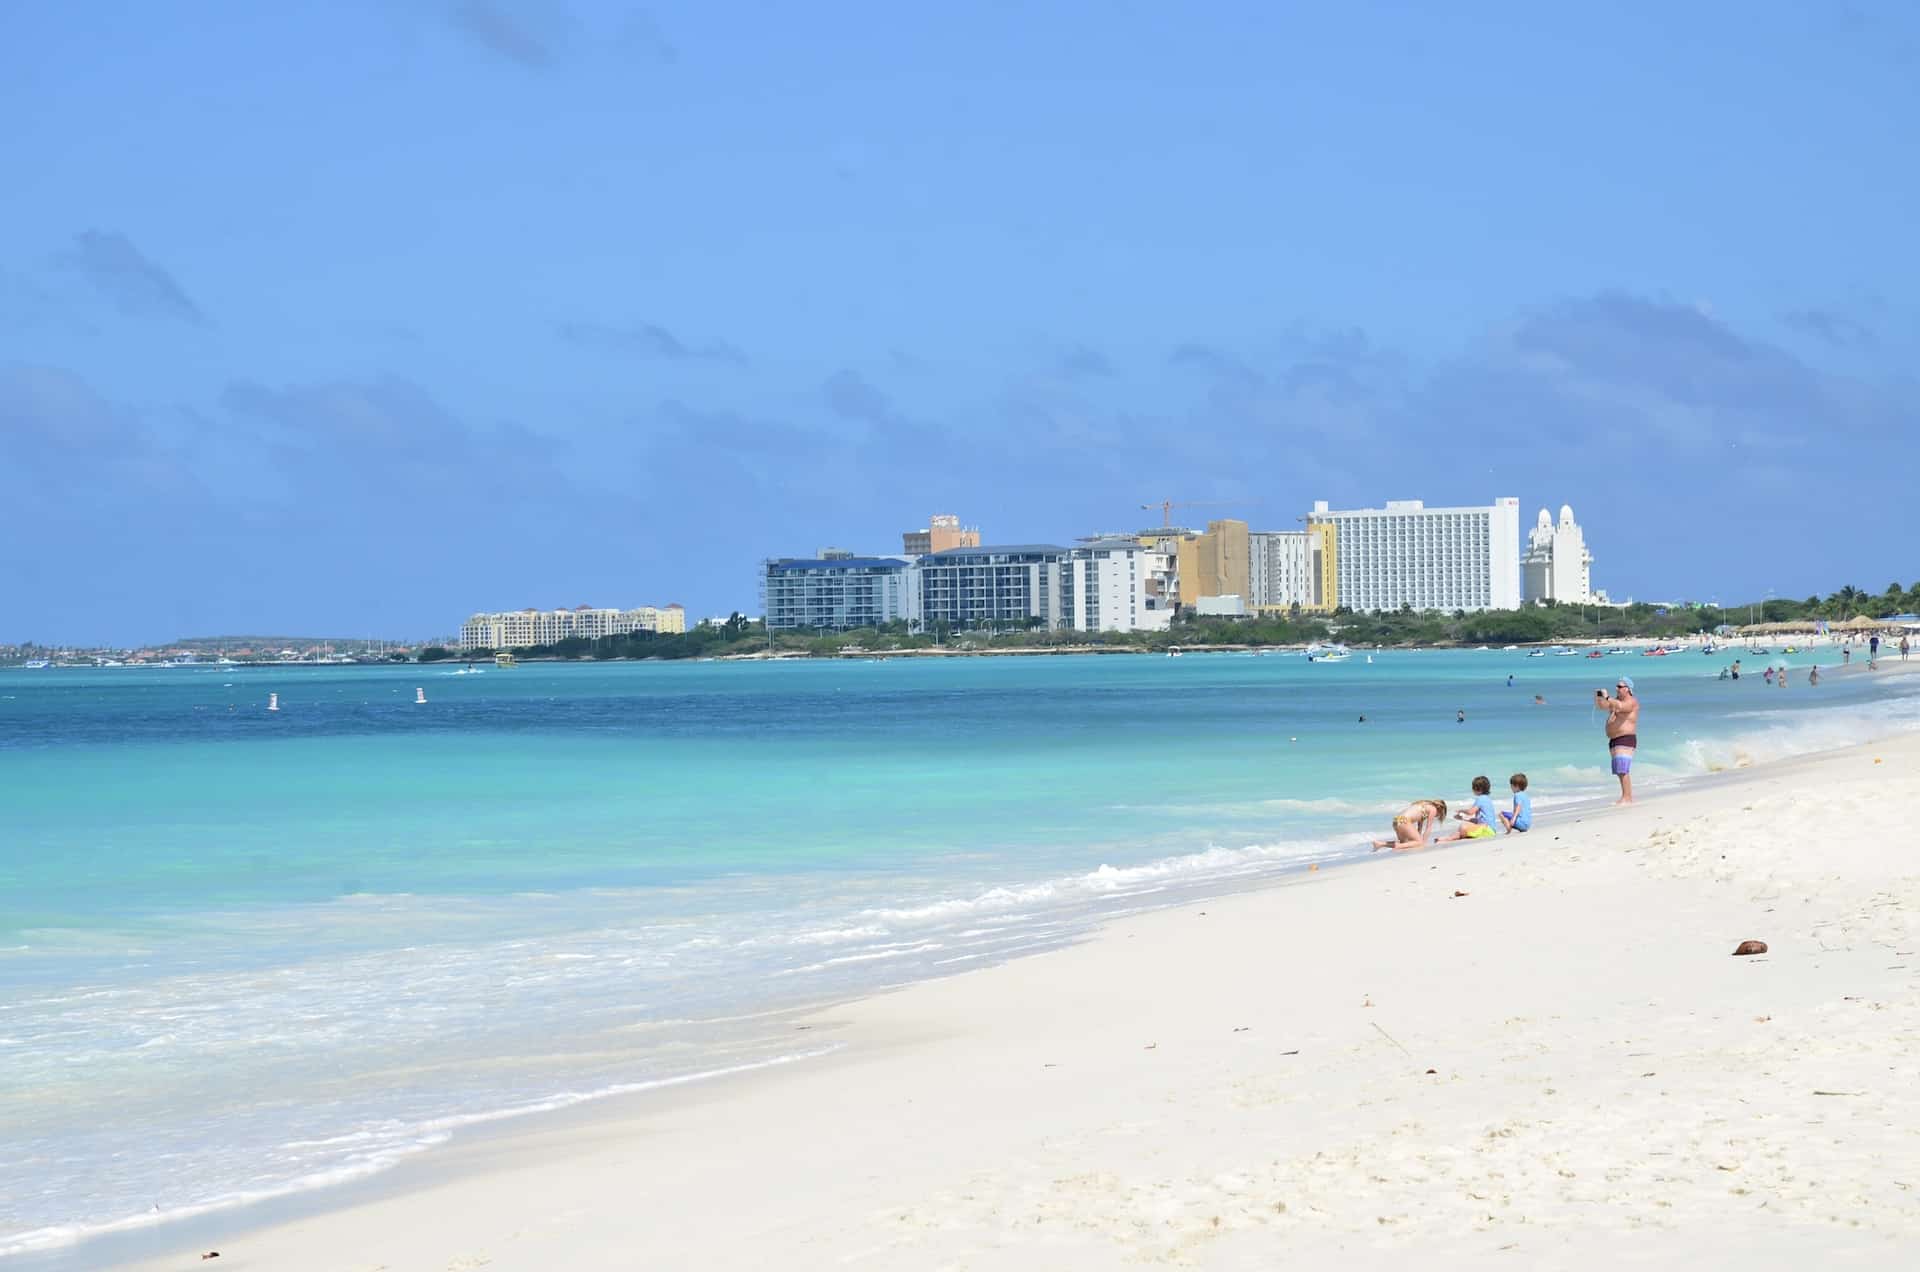 High-rise resorts on Palm Beach in Noord, Aruba